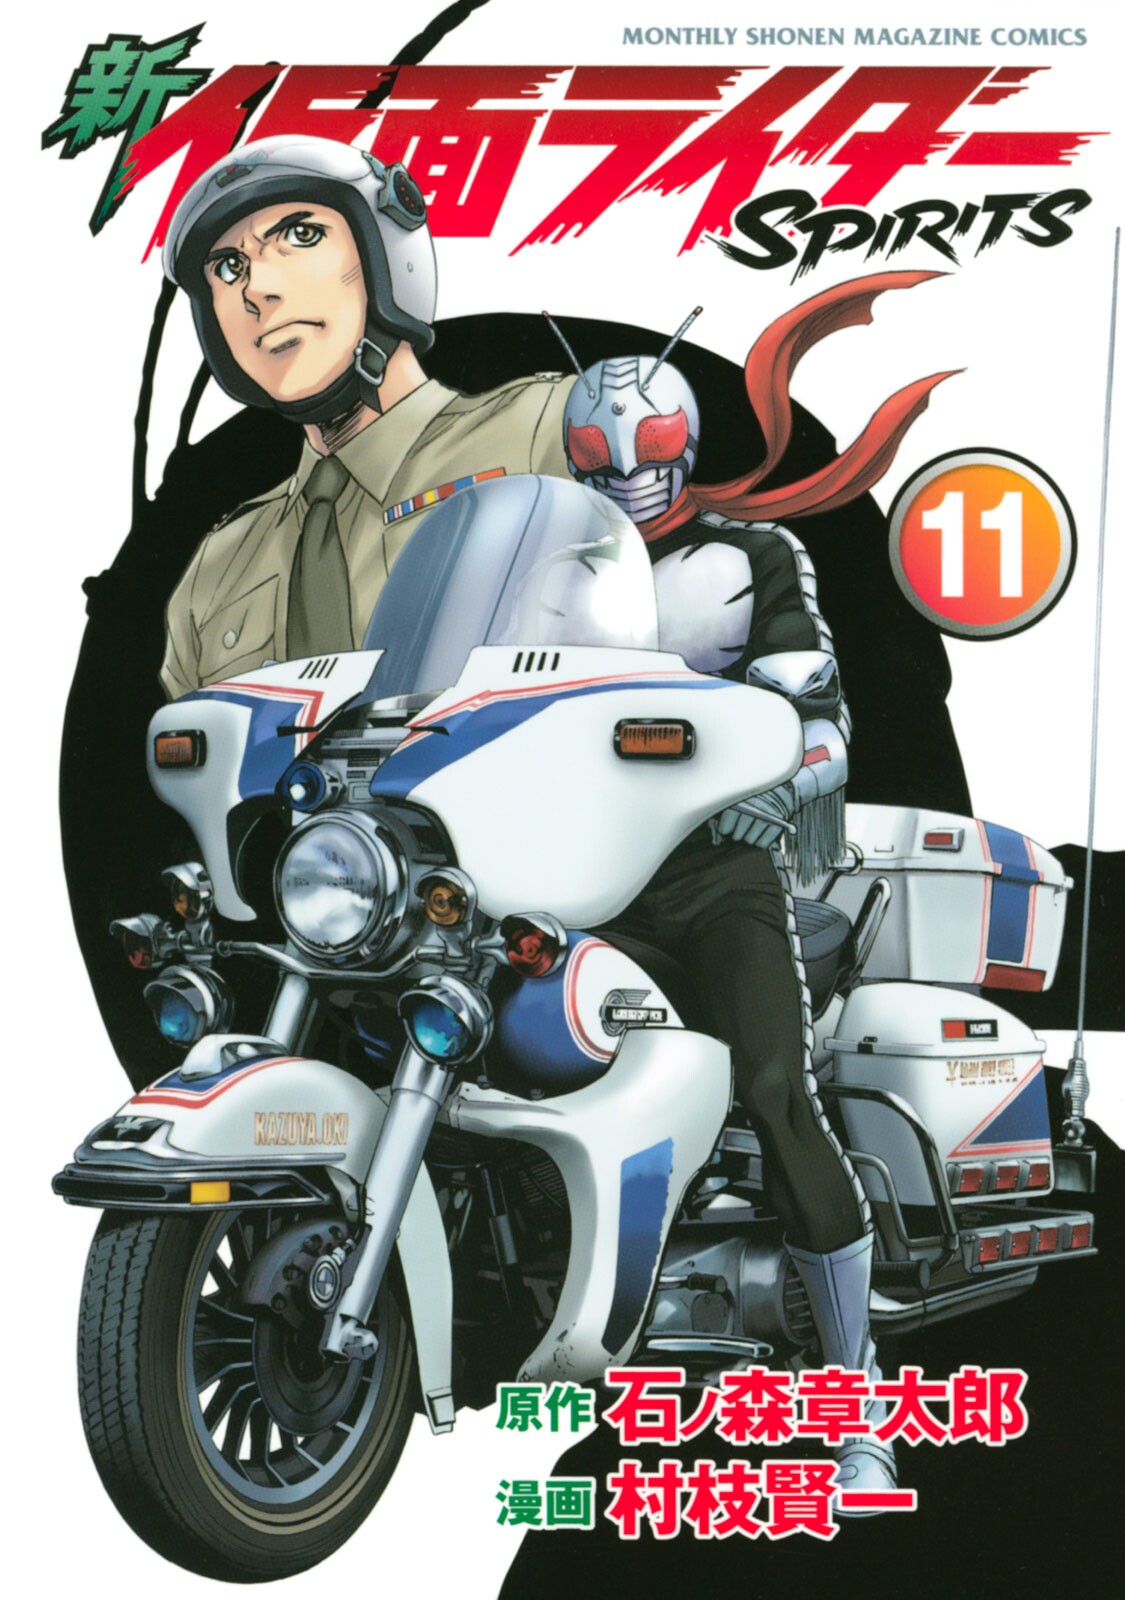 Shin Kamen Rider Spirits cover 55